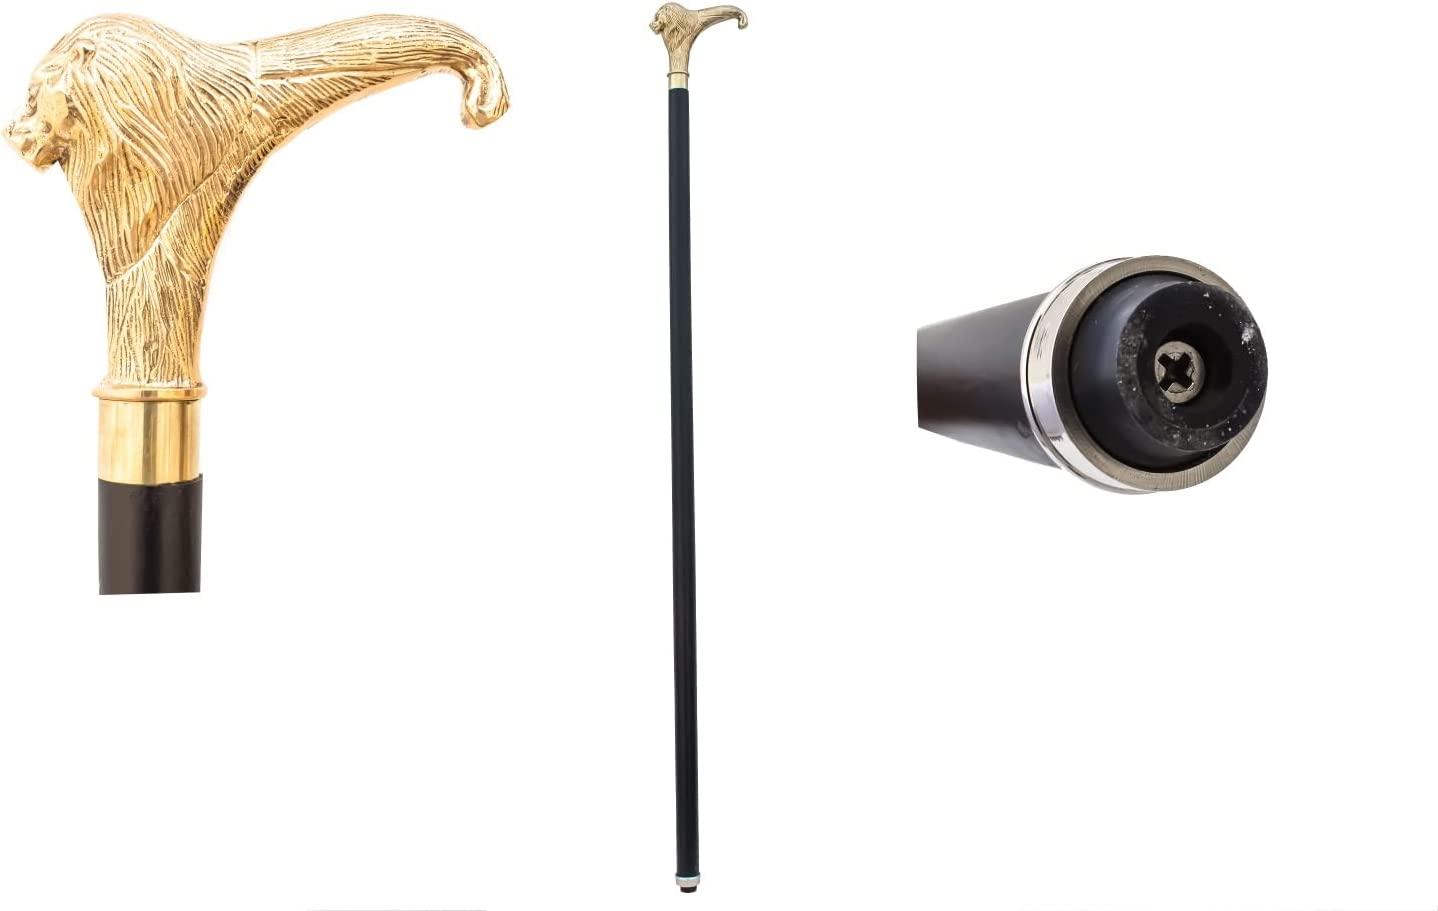 Luxury Walking Stick, Golden Lion Head Fashion Walking Cane for Men - 90 cm